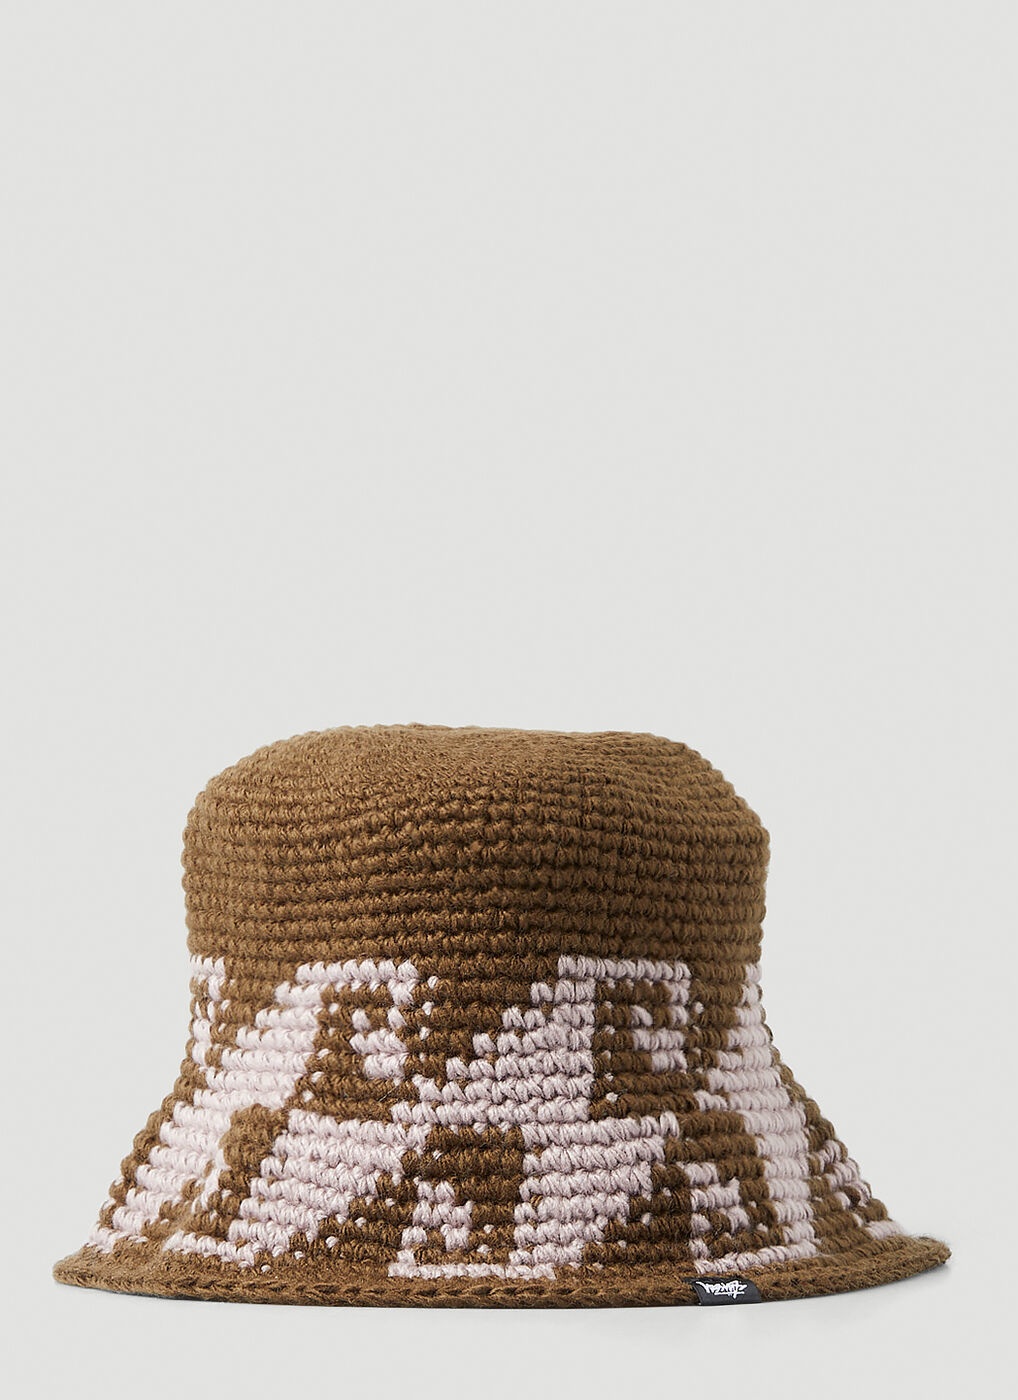 Waves Knit Bucket Hat in Brown Stussy